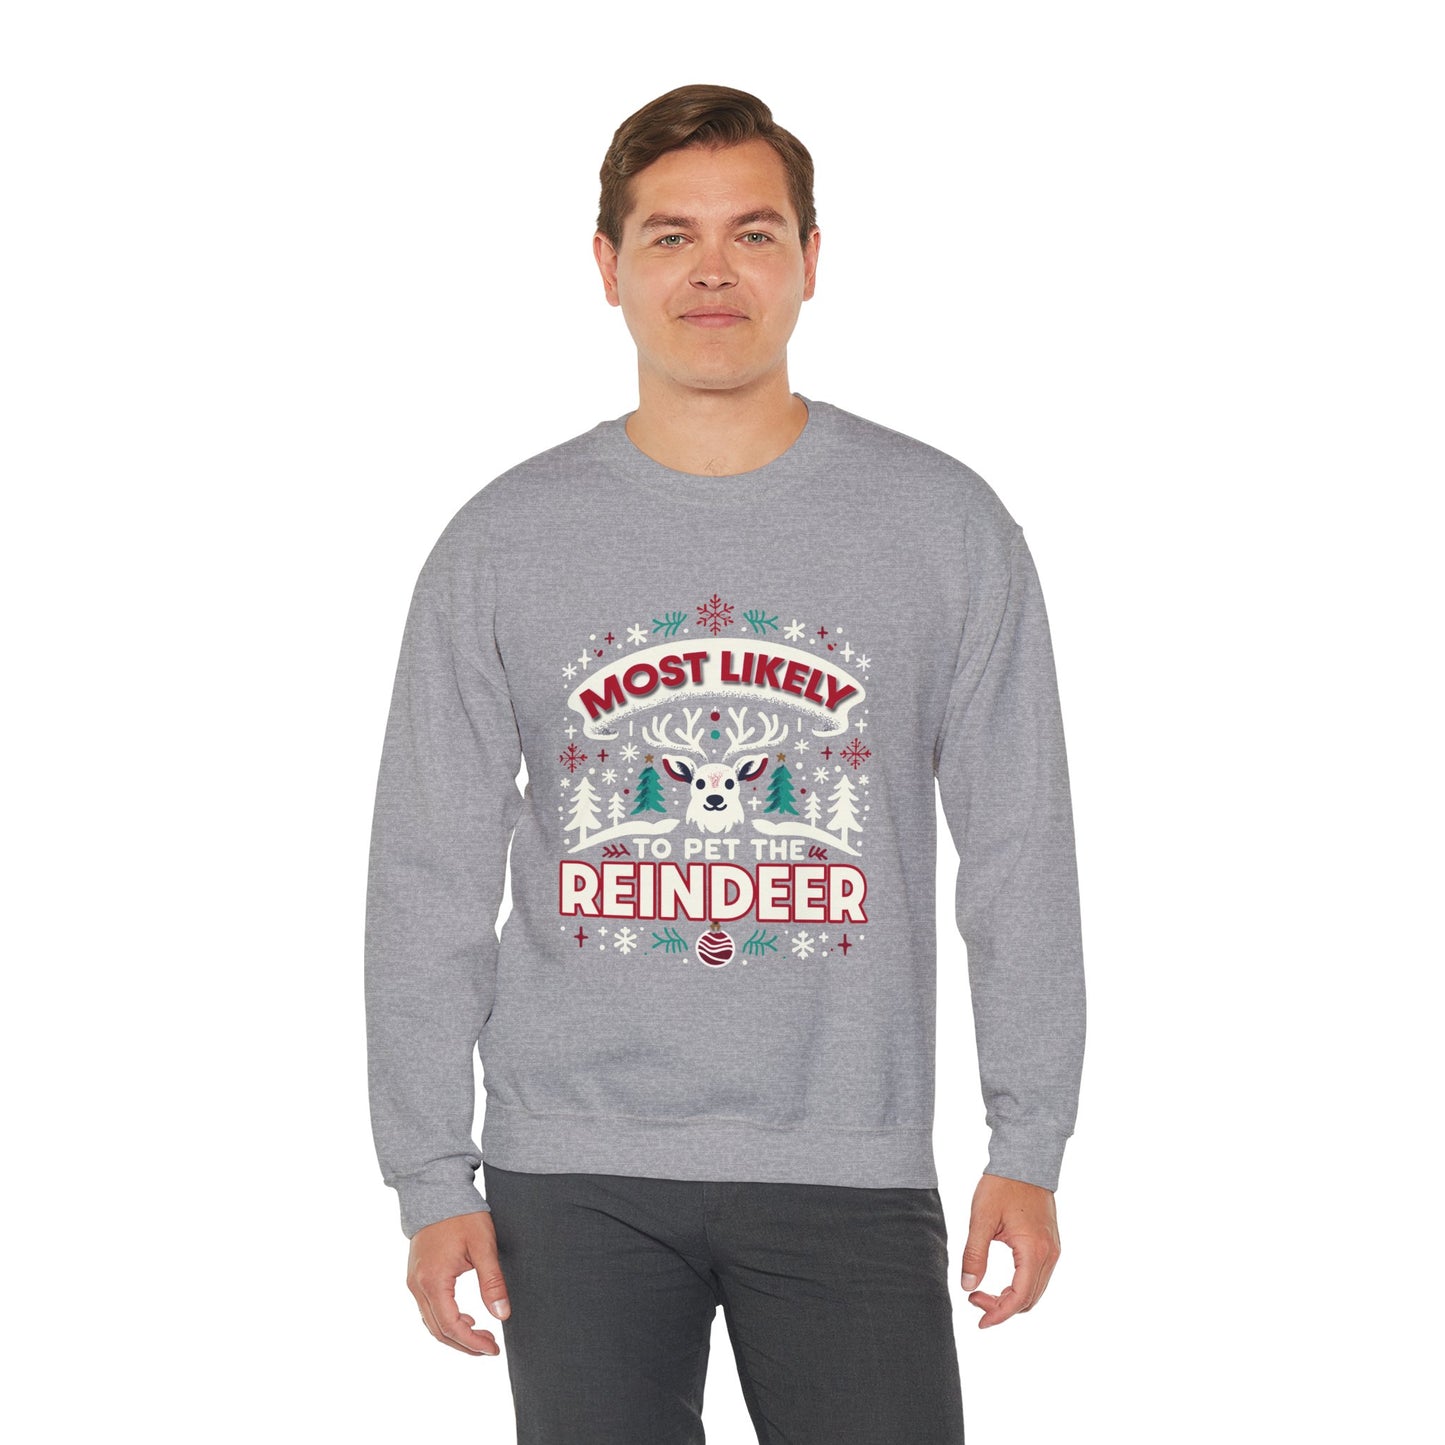 Most Likely to Pet the Reindeer Crewneck Sweatshirt